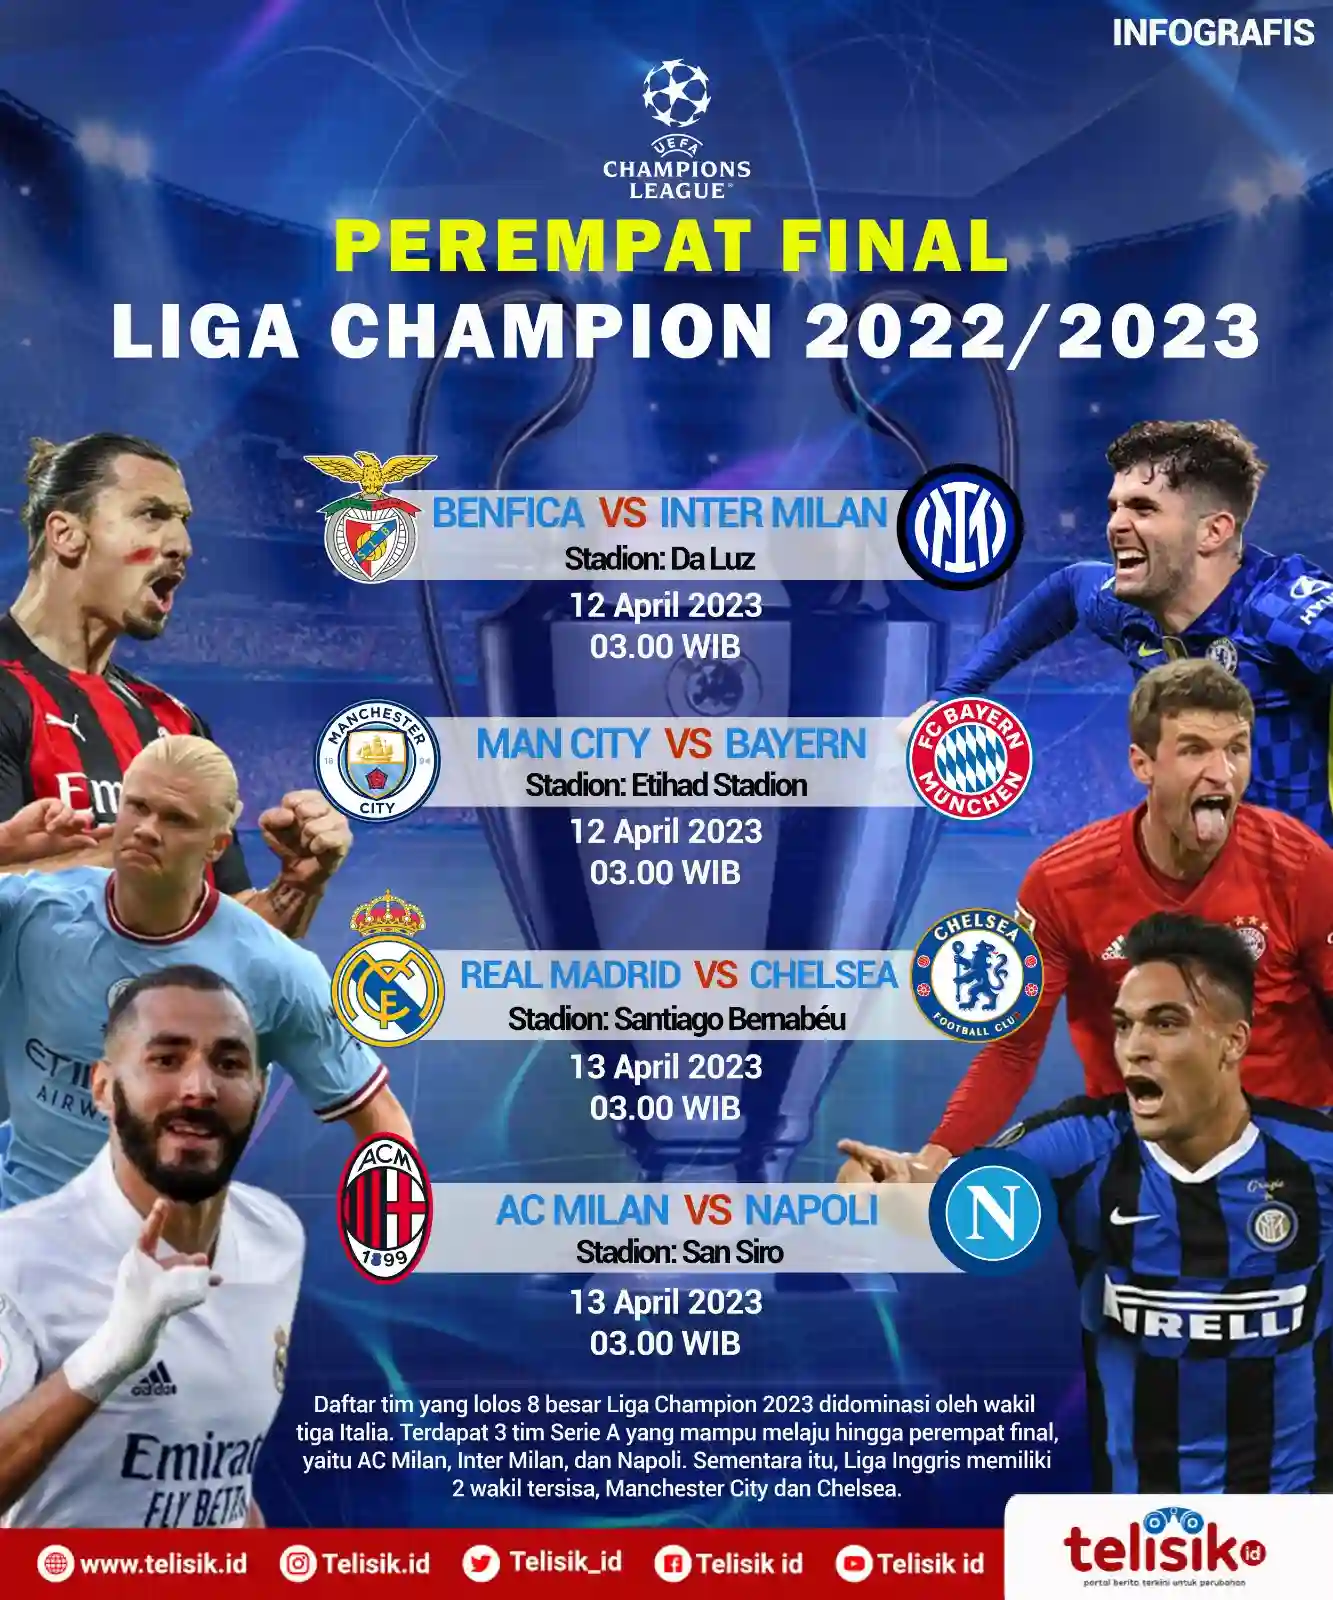 Infografis: Jadwal Perempat Final Liga Champion 2022-2023